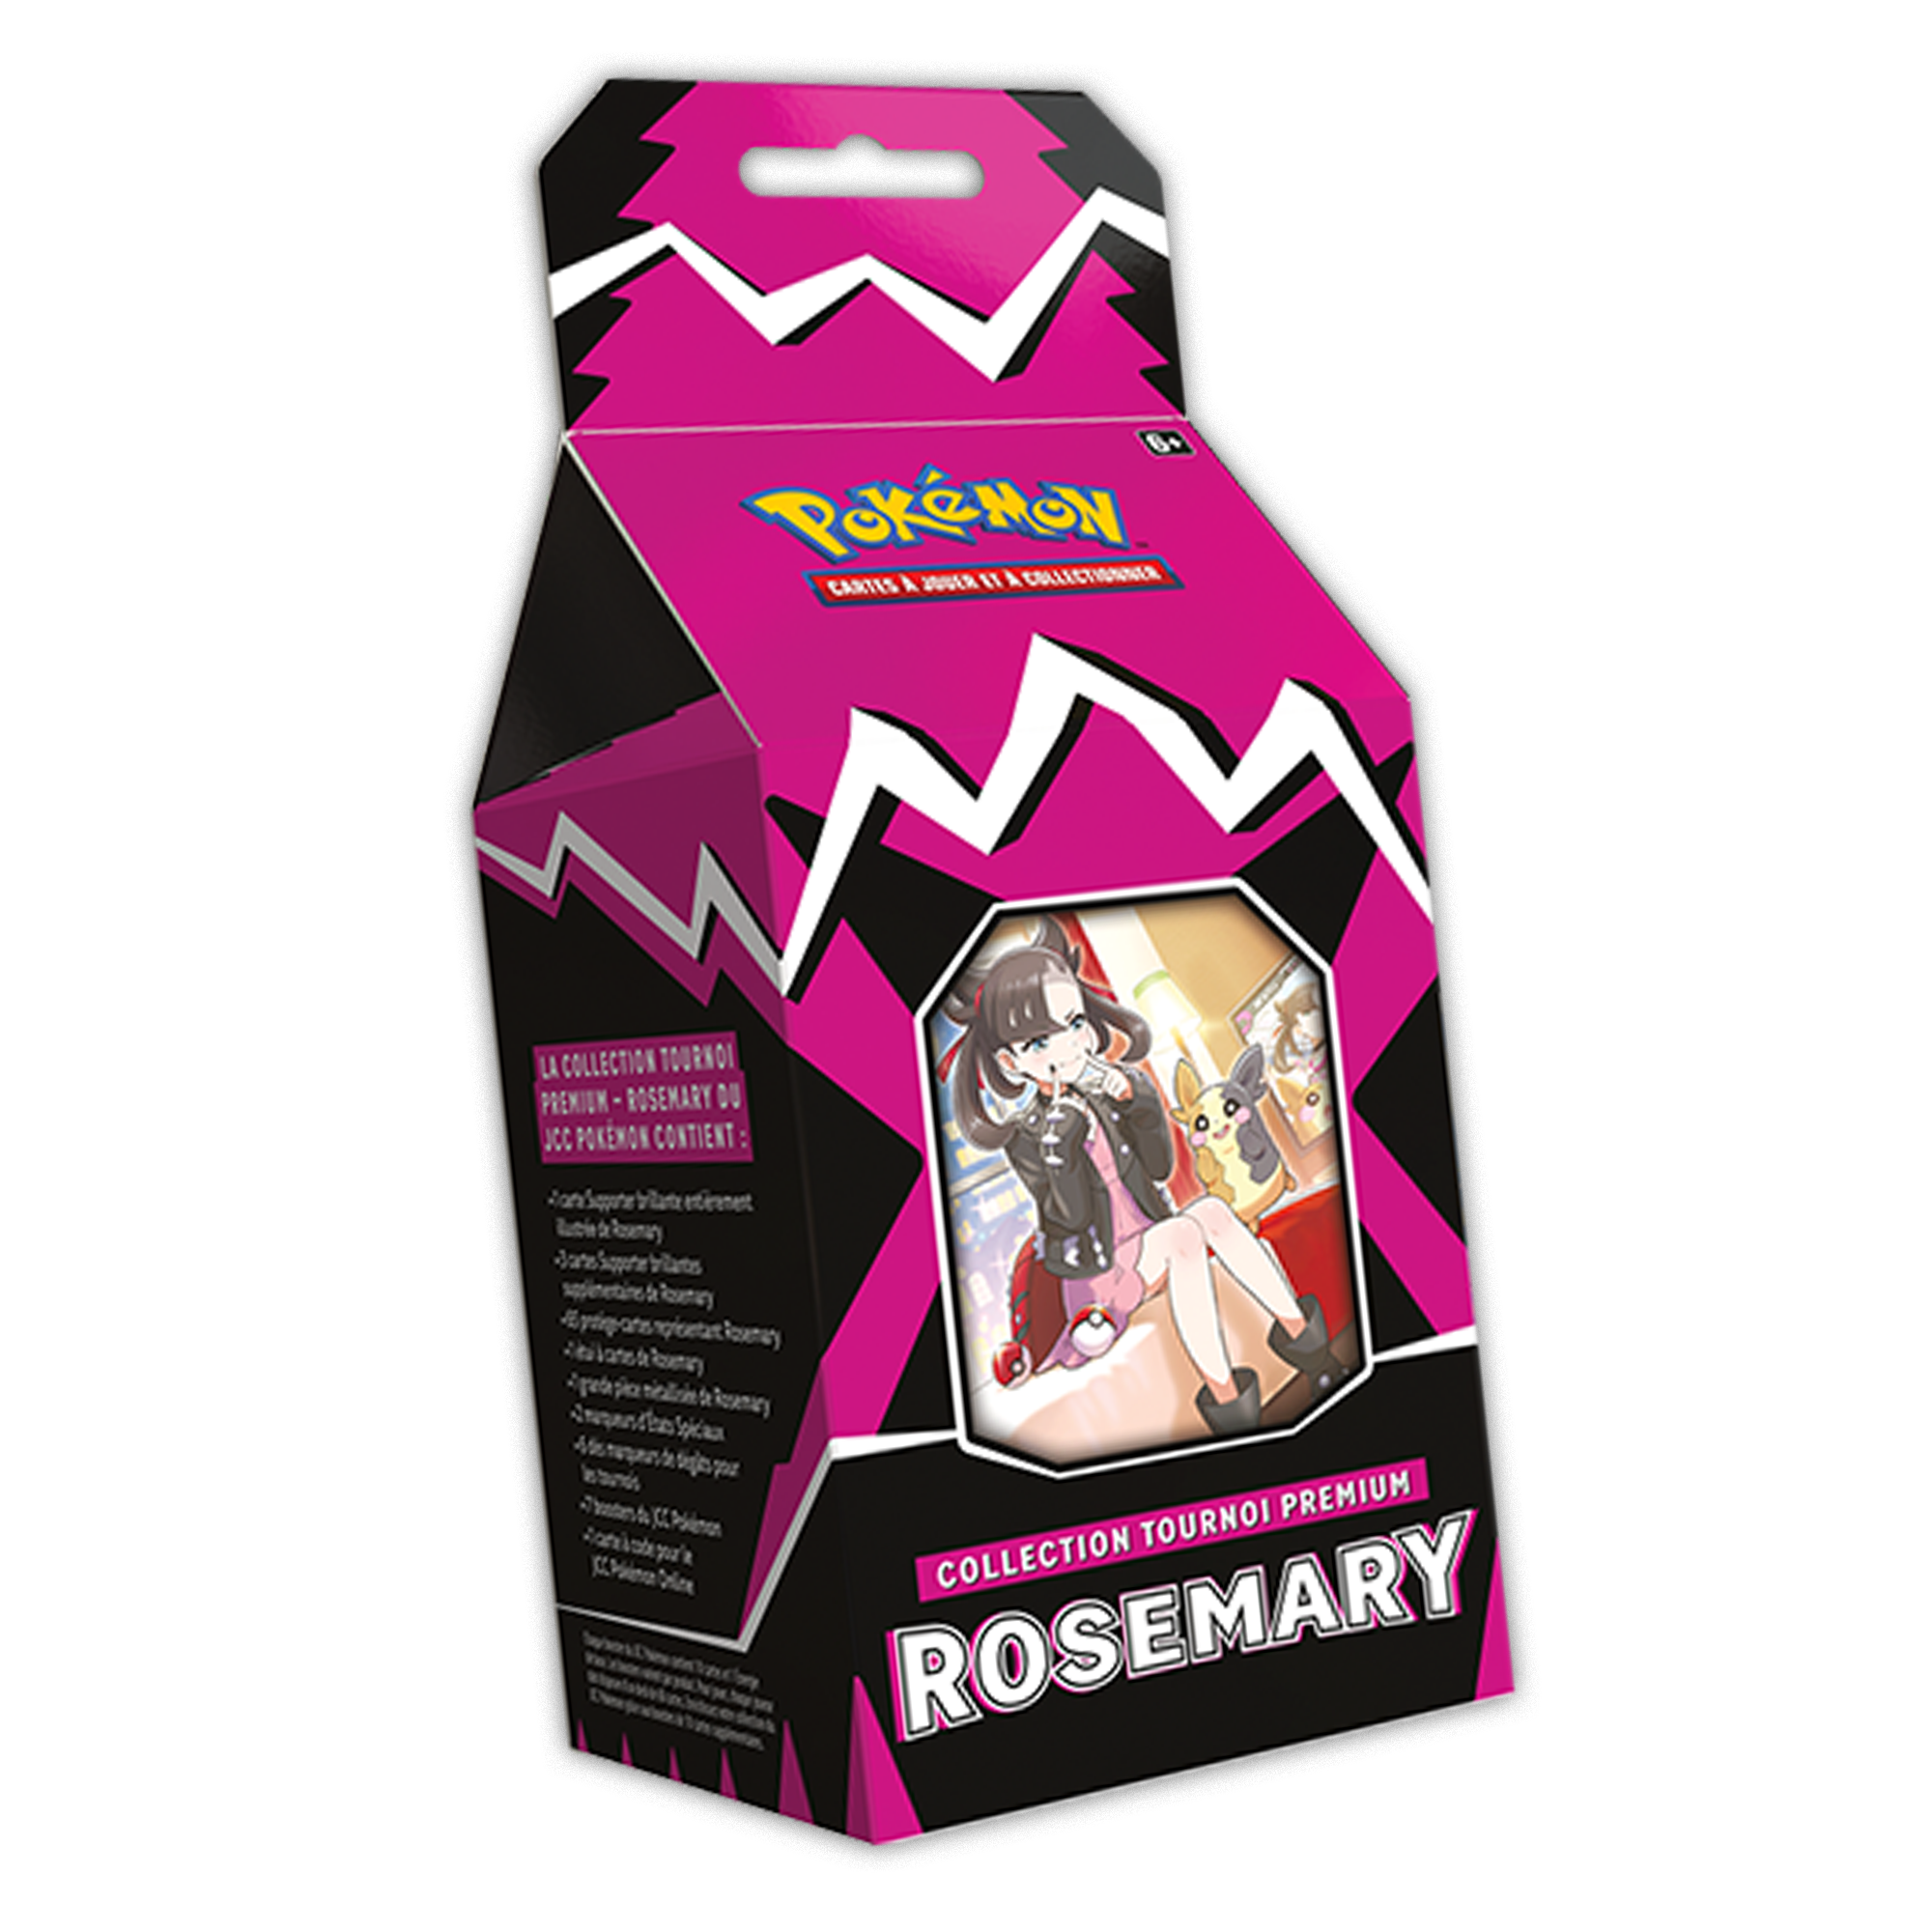 [SCELLE] Coffret Tournoi Premium - Dresseur Rosemary [FR]